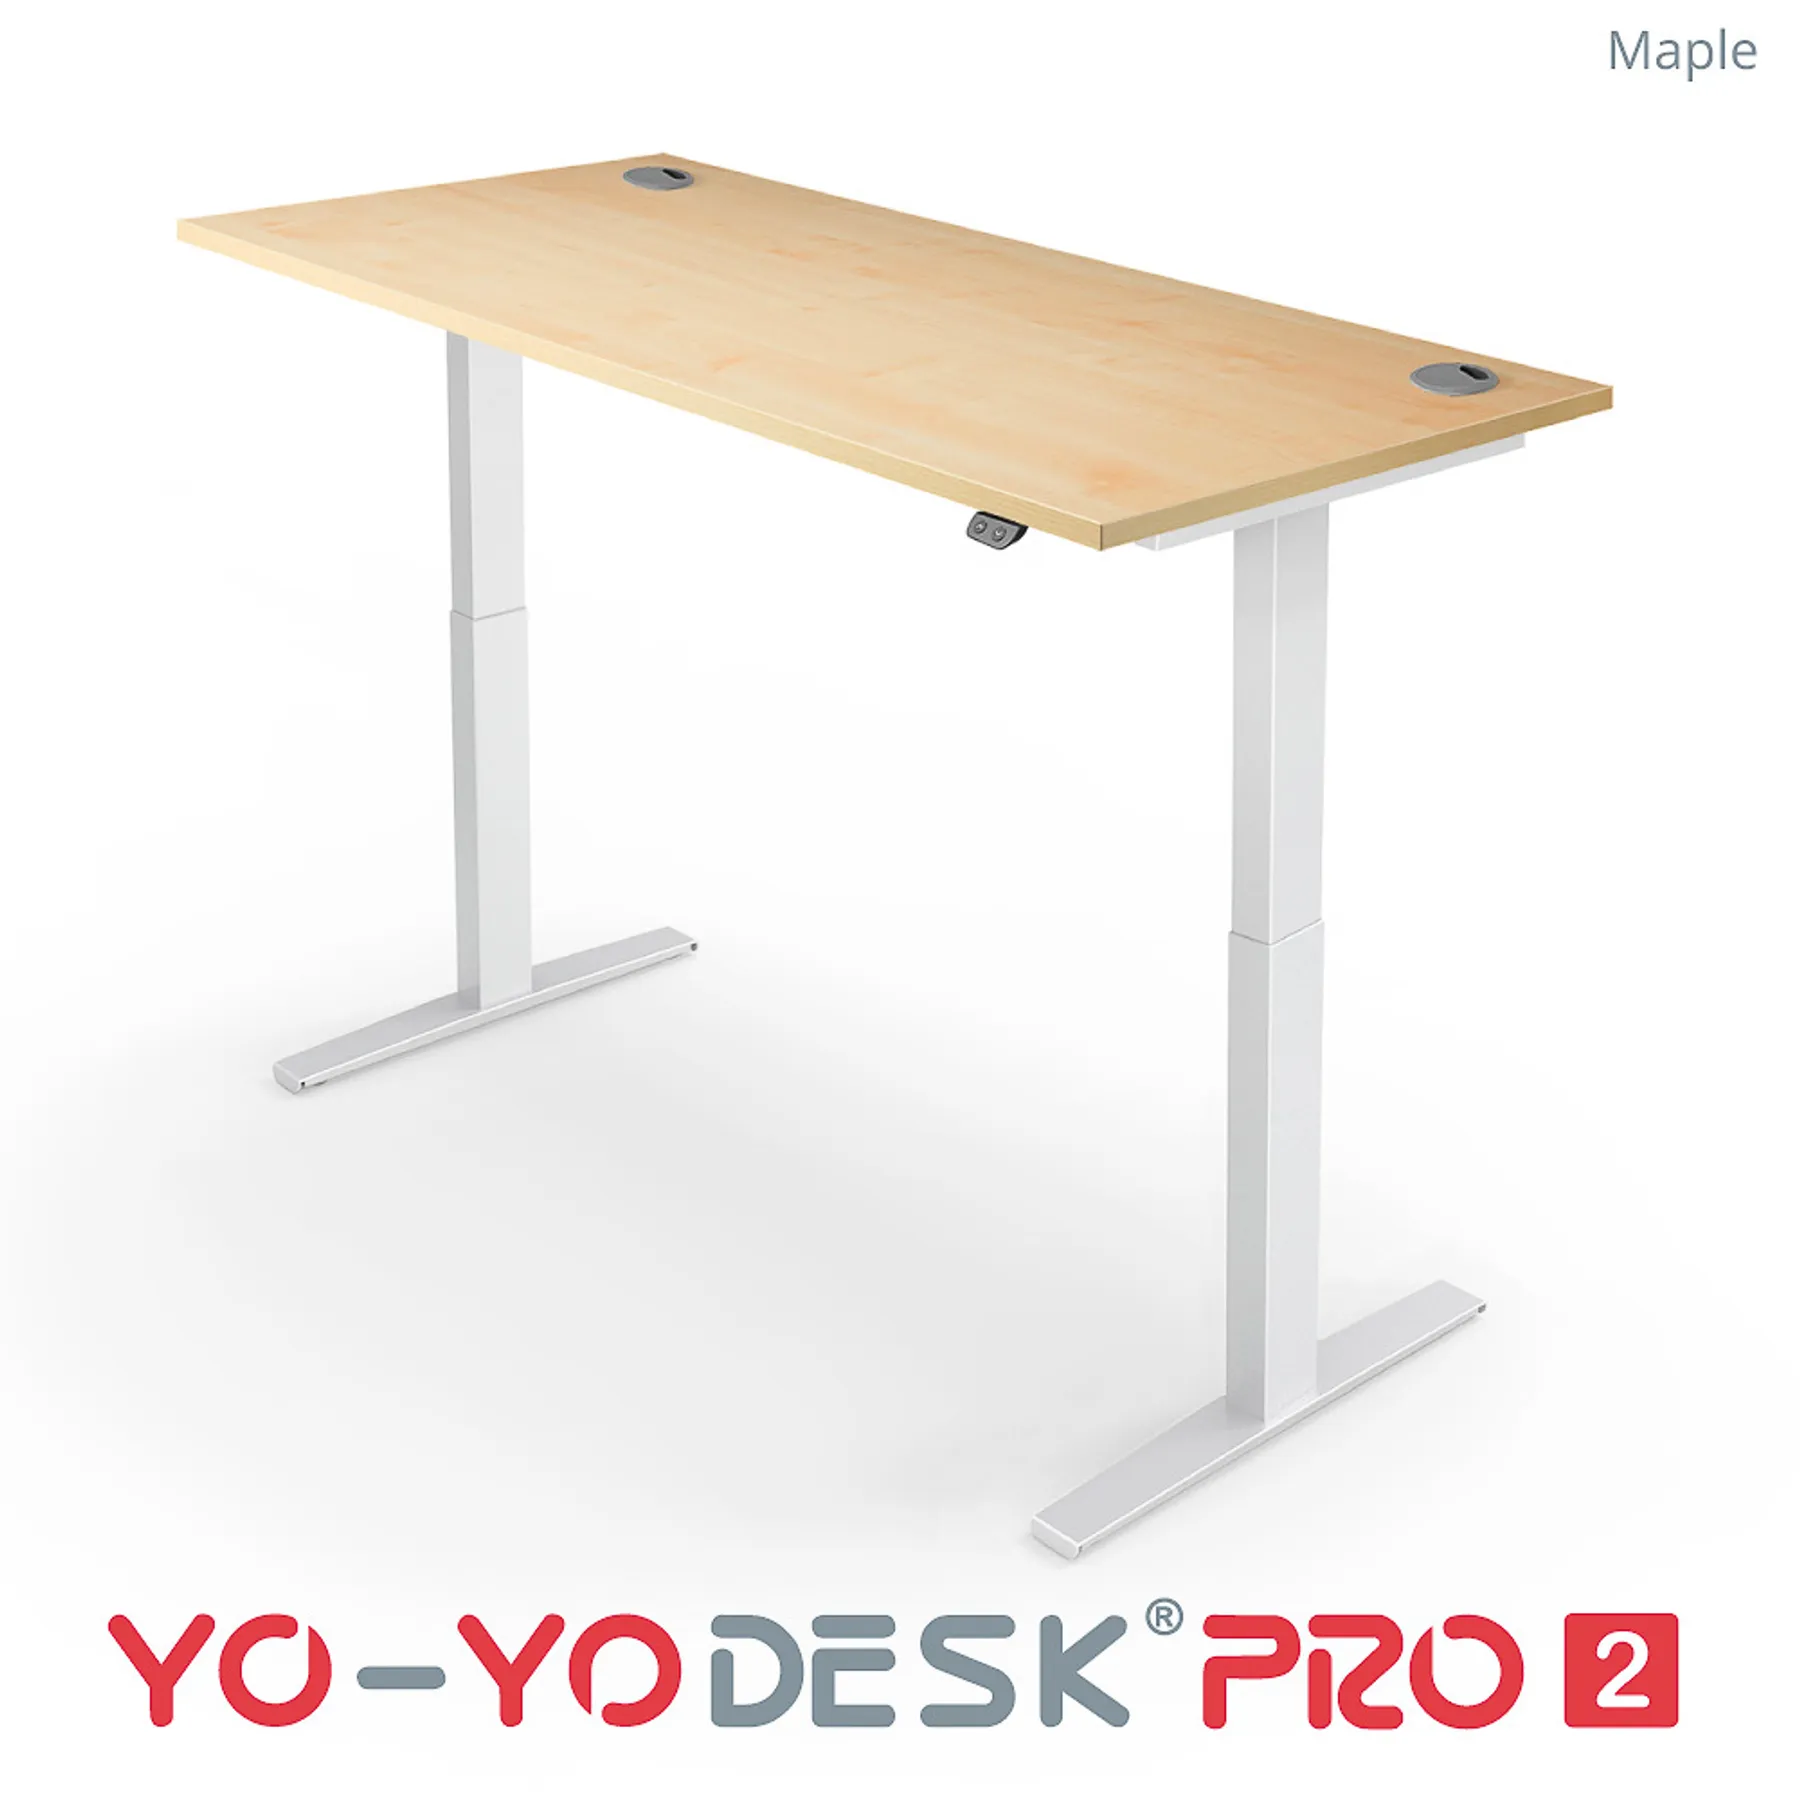 Lof direct yoyo desk pro 2 White Frame Maple top